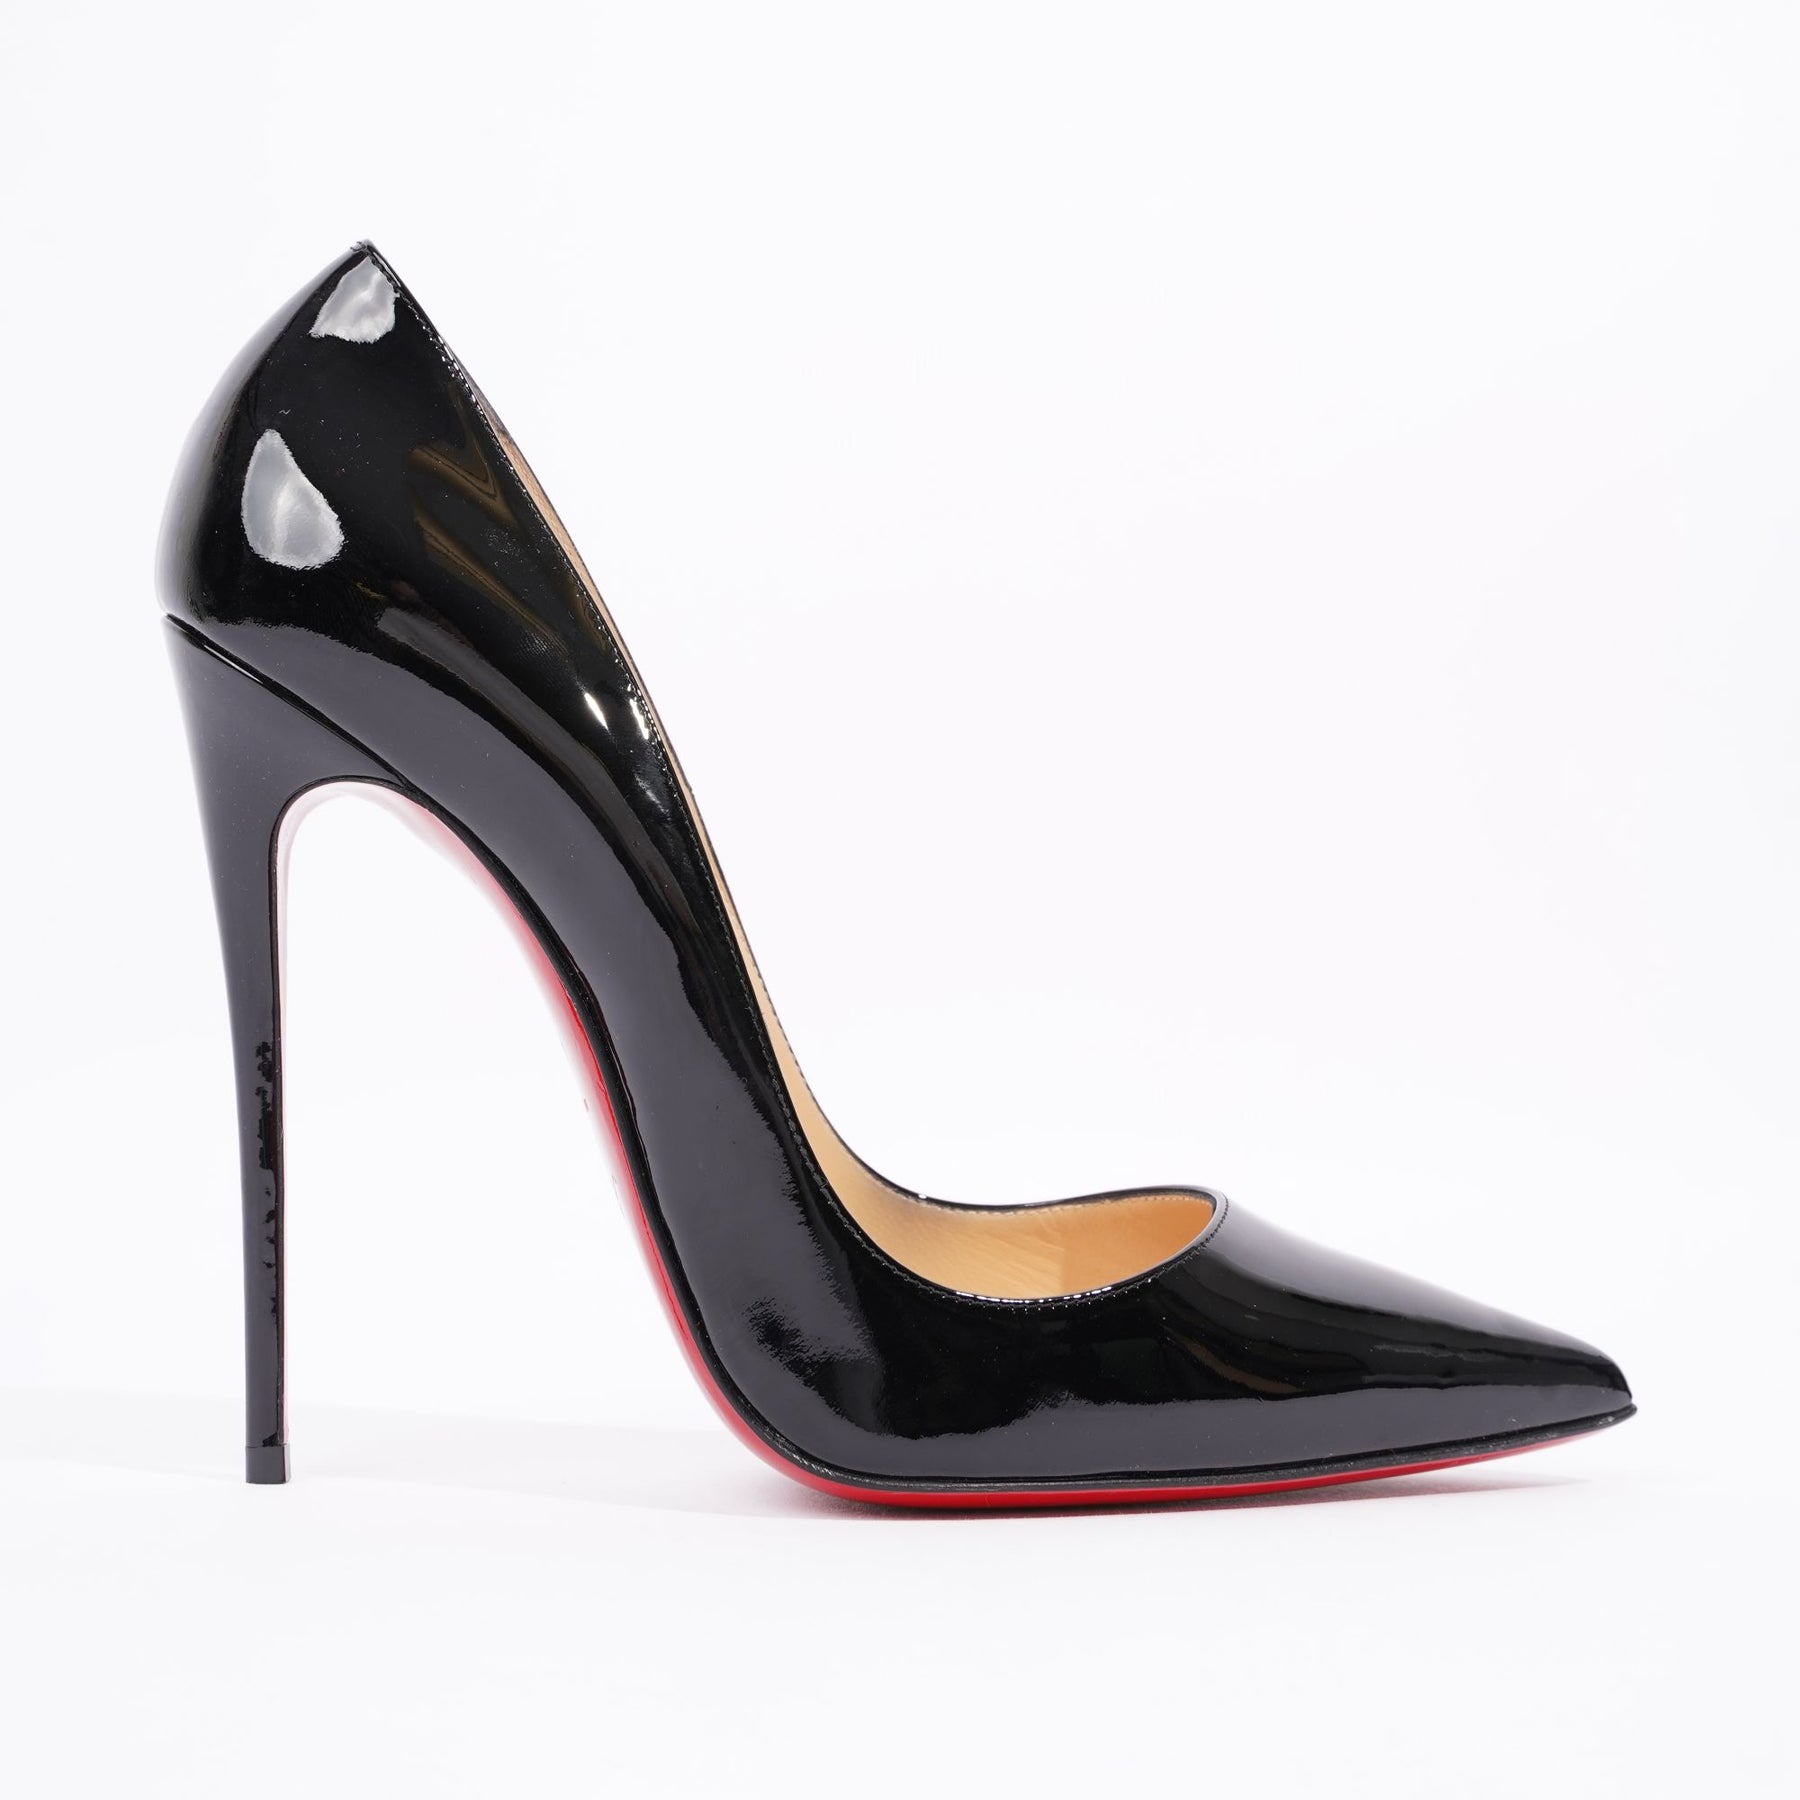 So Kate 120 White Patent leather - Women Shoes - Christian Louboutin